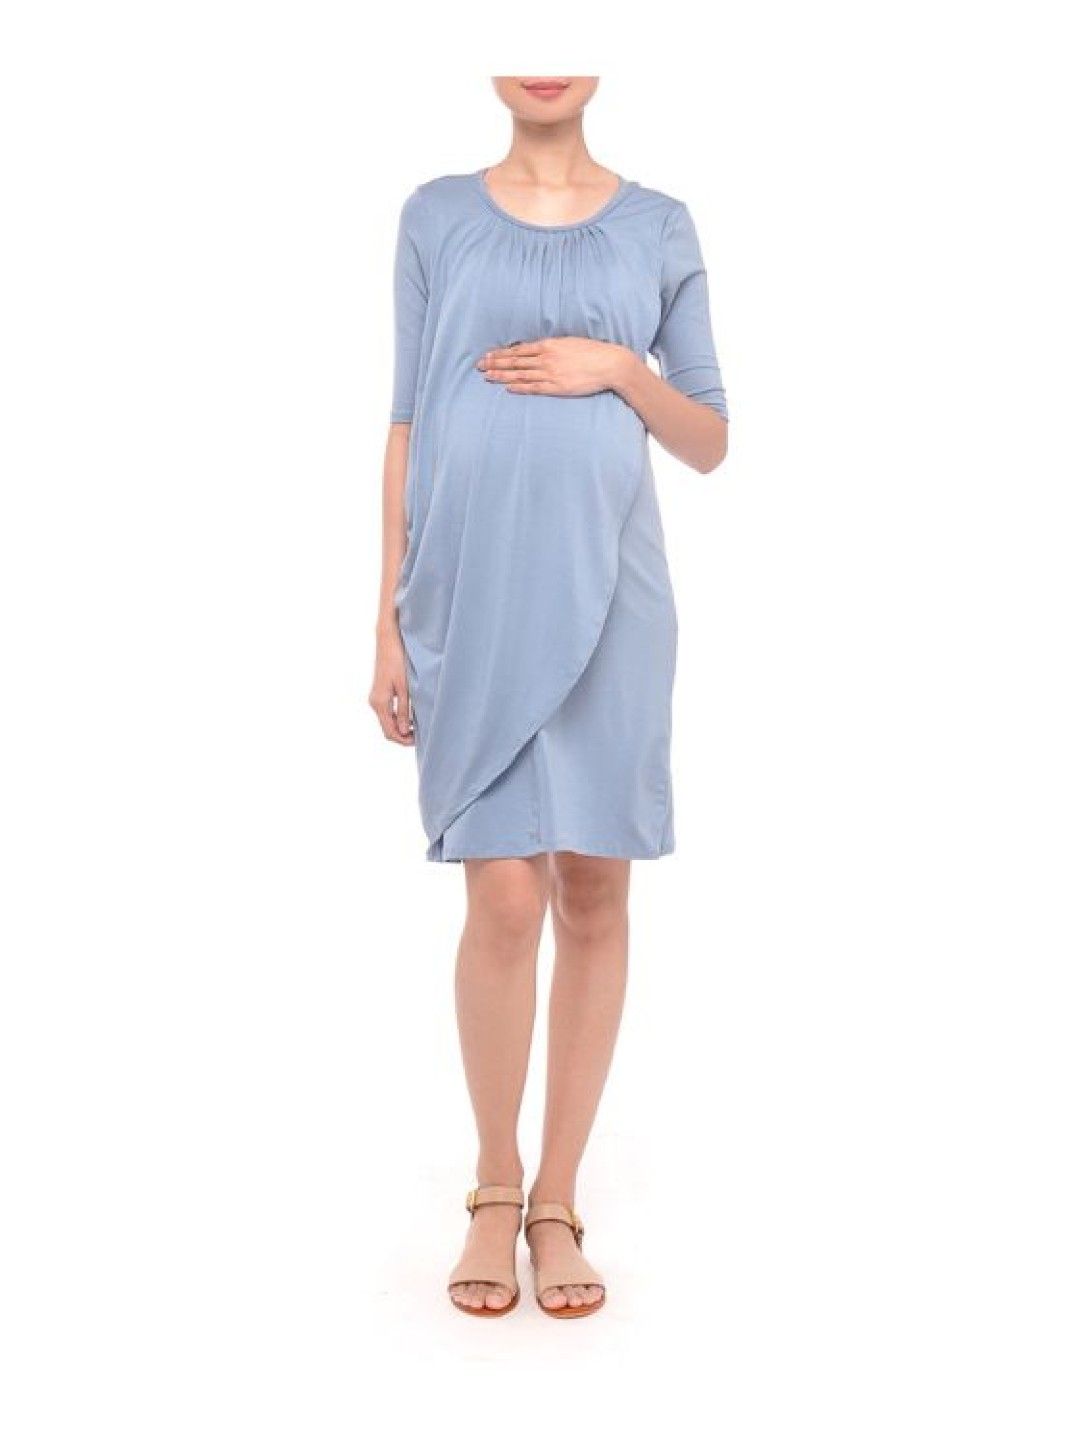 Elin Women's Clothing - Maternity and Nursing Wear.